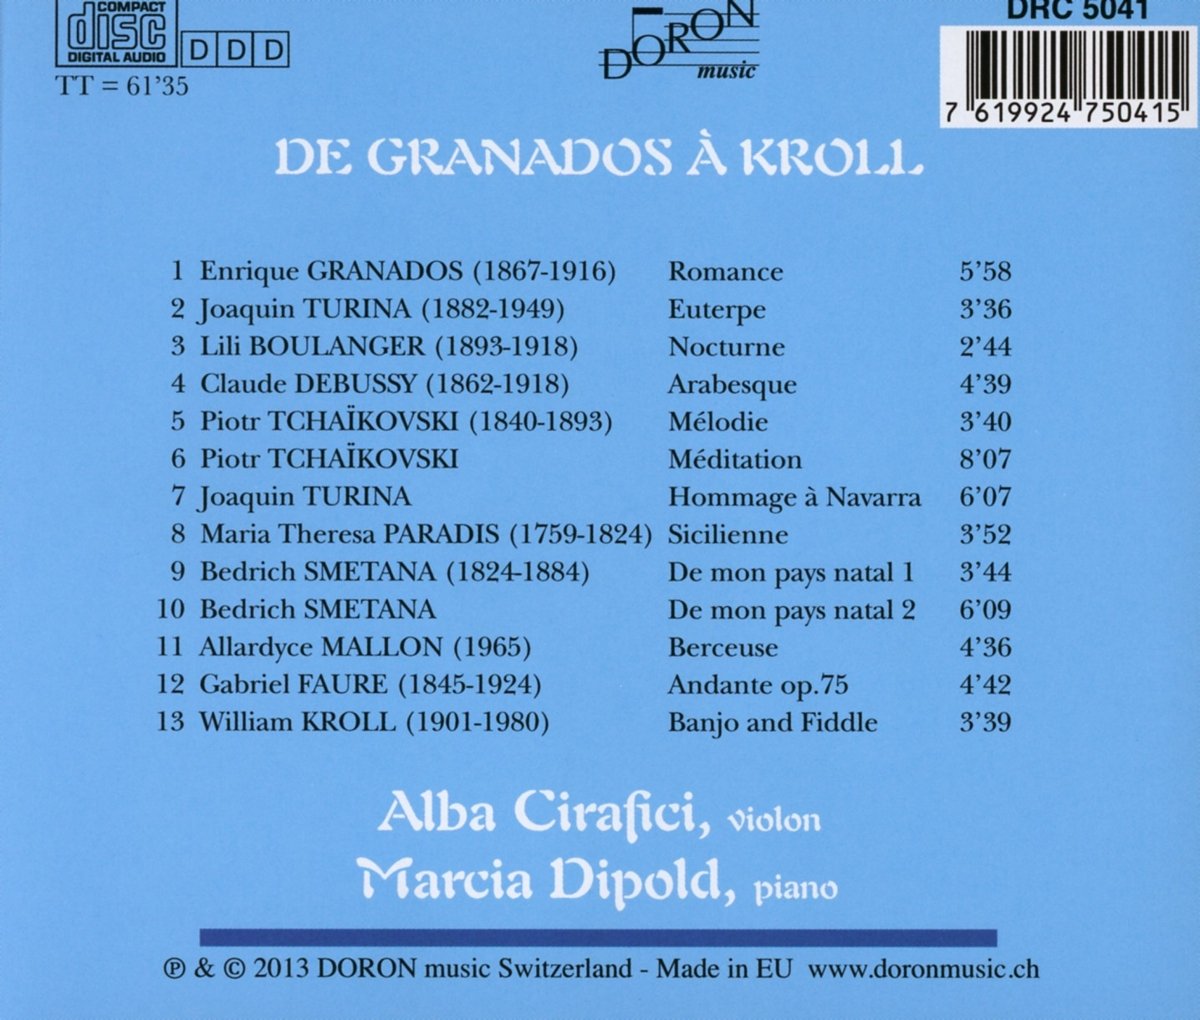 Alba Cirafici 그라나도스부터 크롤까지 - 바이올린 소품집 (Duo D'alma : De Granados A Kroll) 